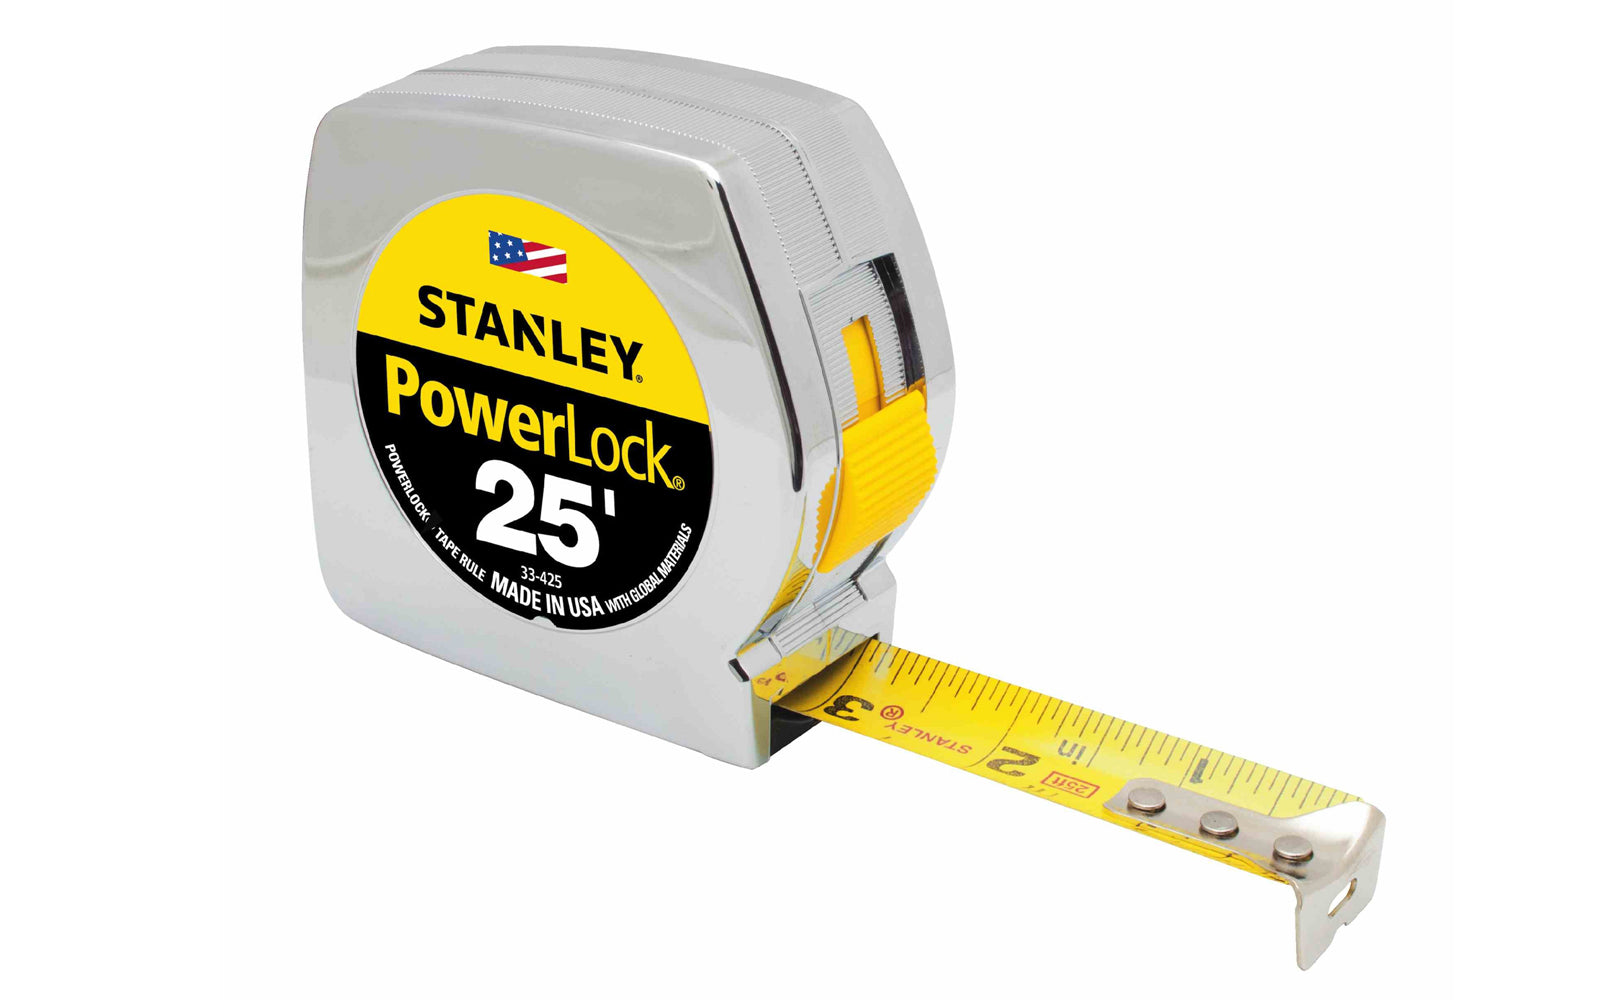 Stanley Powerlock 25' Tape Measure ~ 33-425 - Made in USA